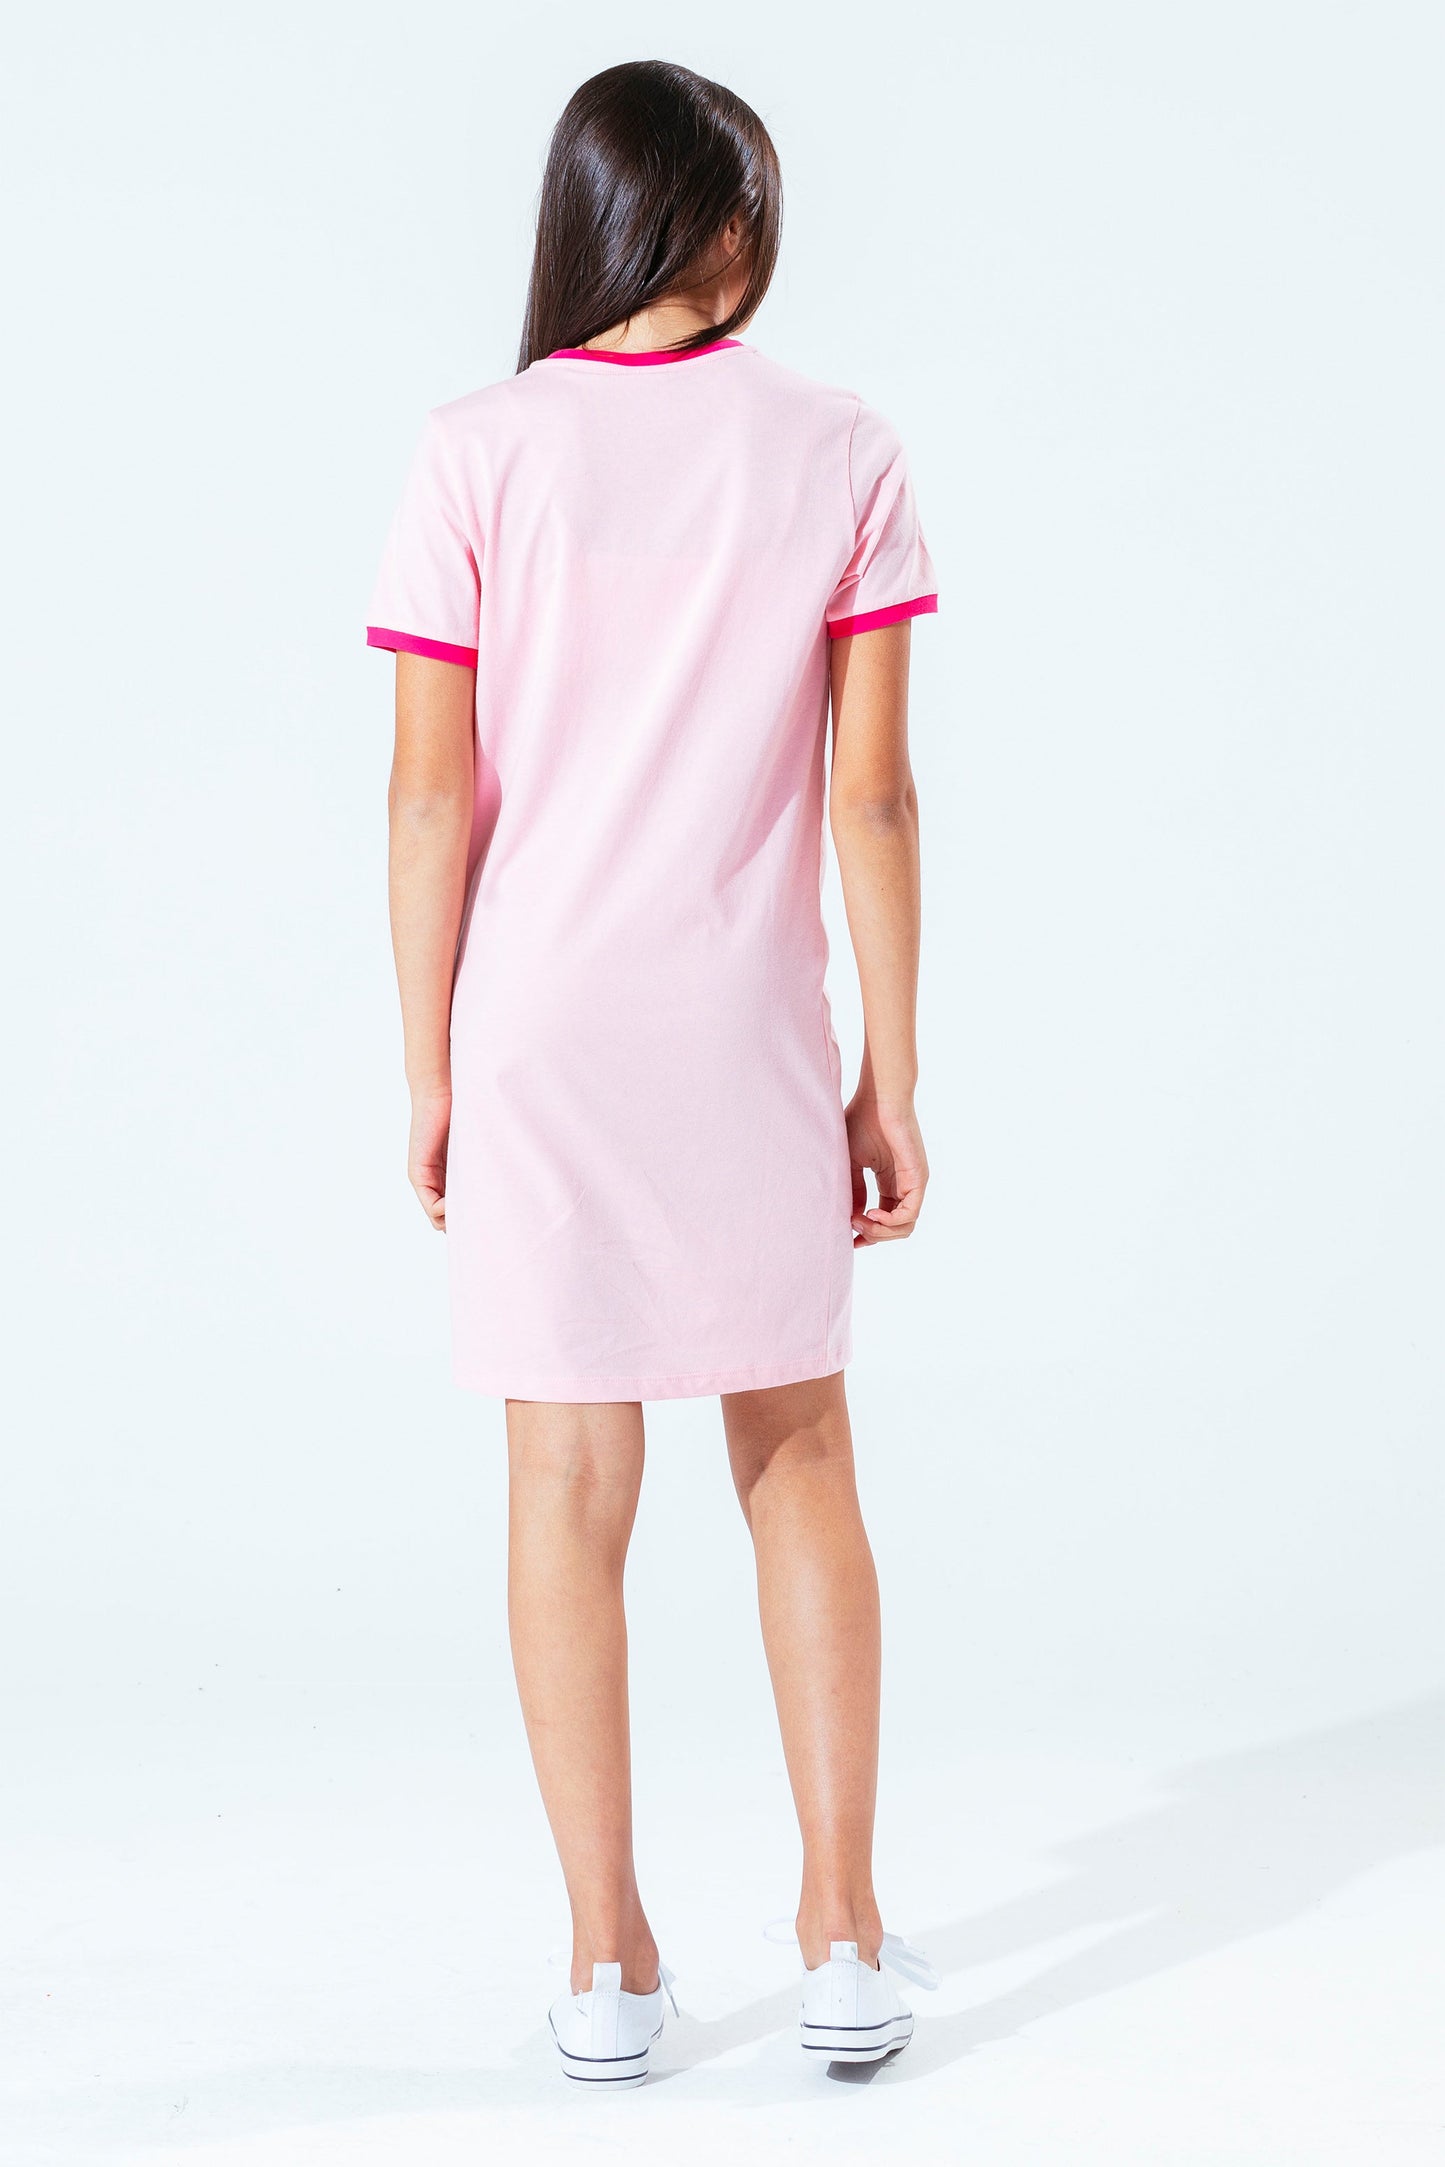 Hype Pink Ringer Kids T-Shirt Dress